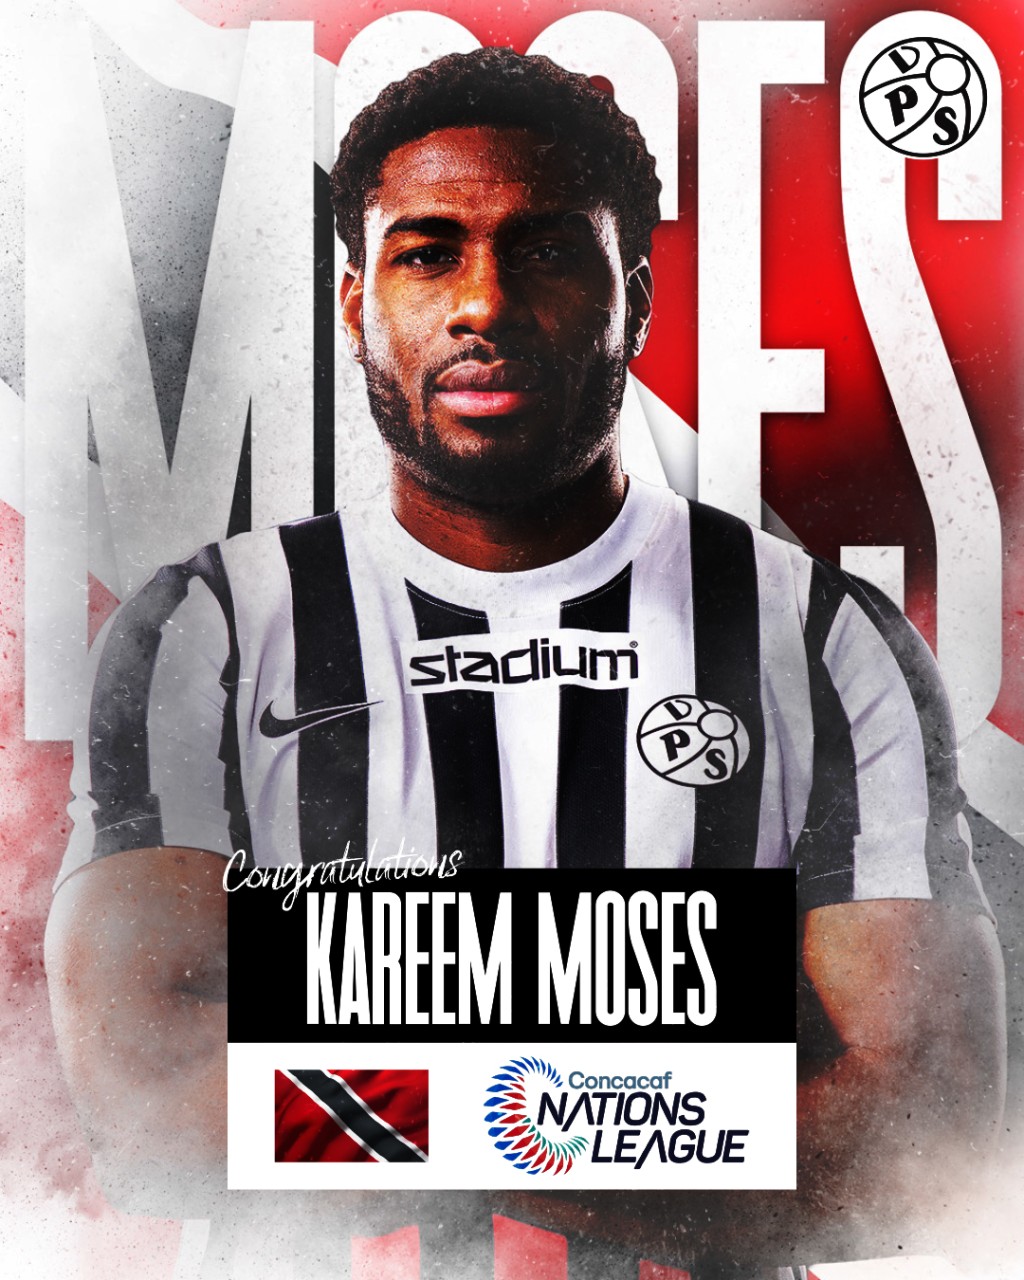 Congratulations to Kareem Moses